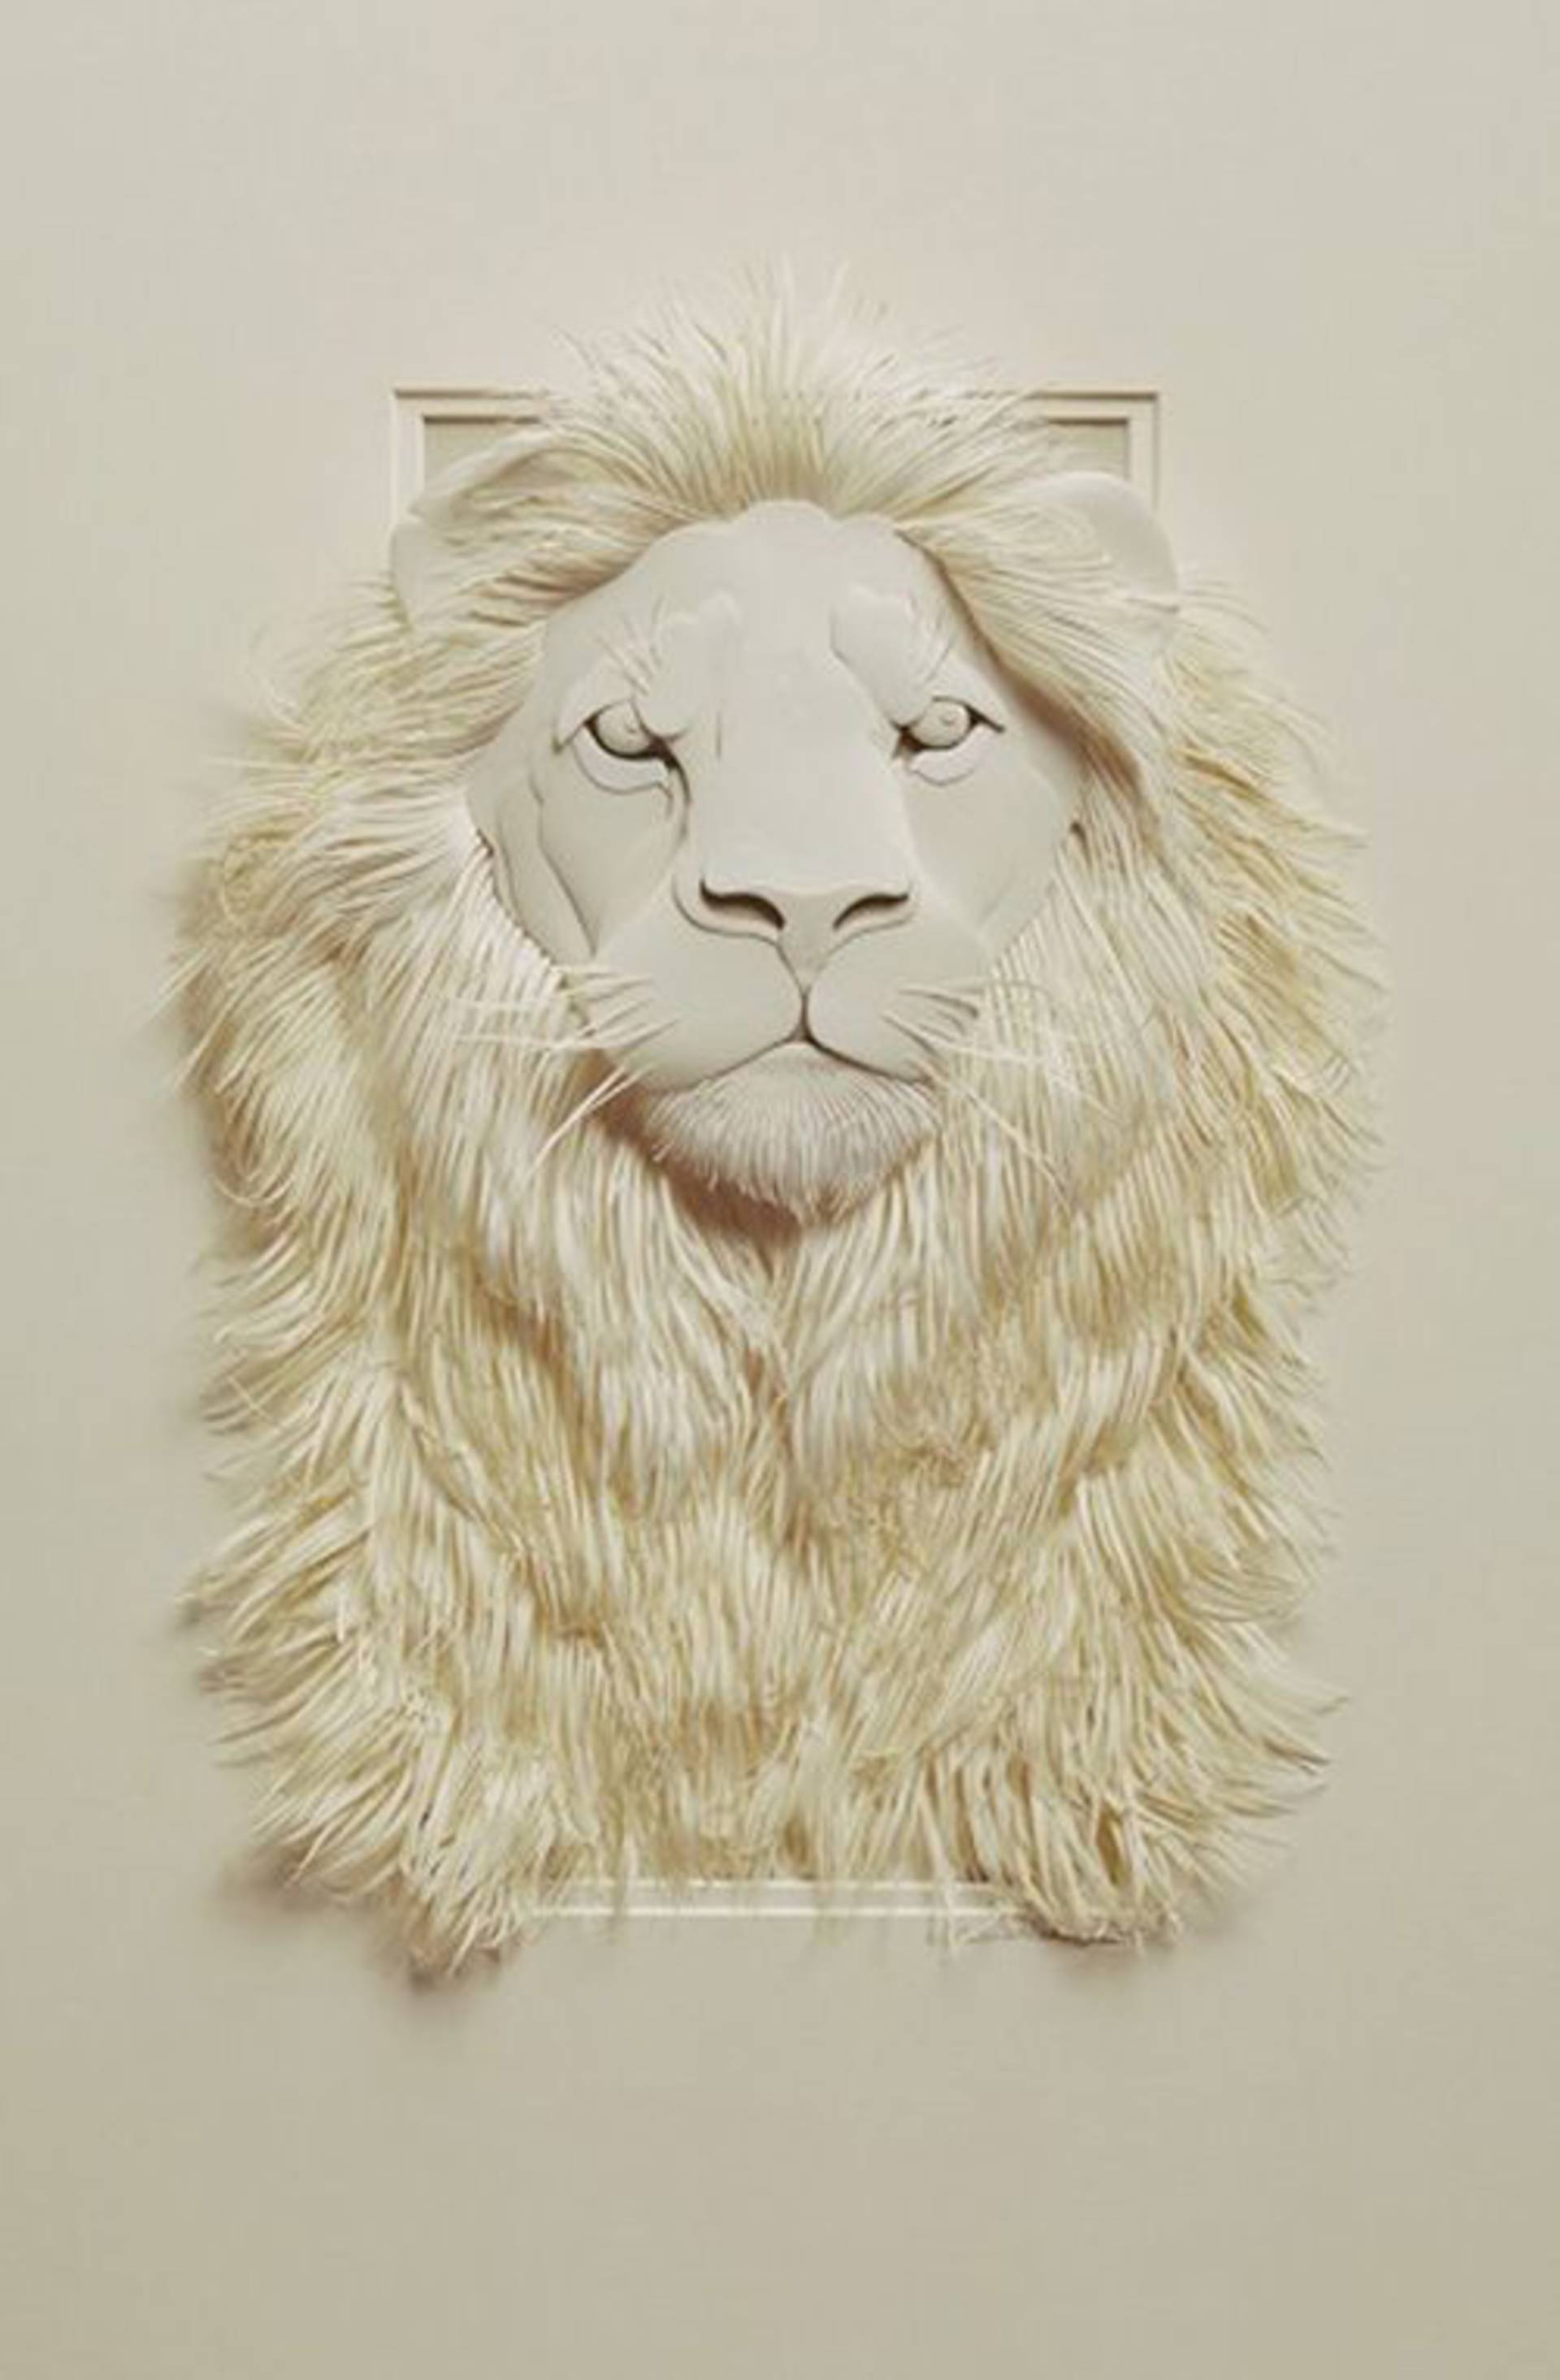 Artist Calvin Nicholls creates insanely detailed paper art